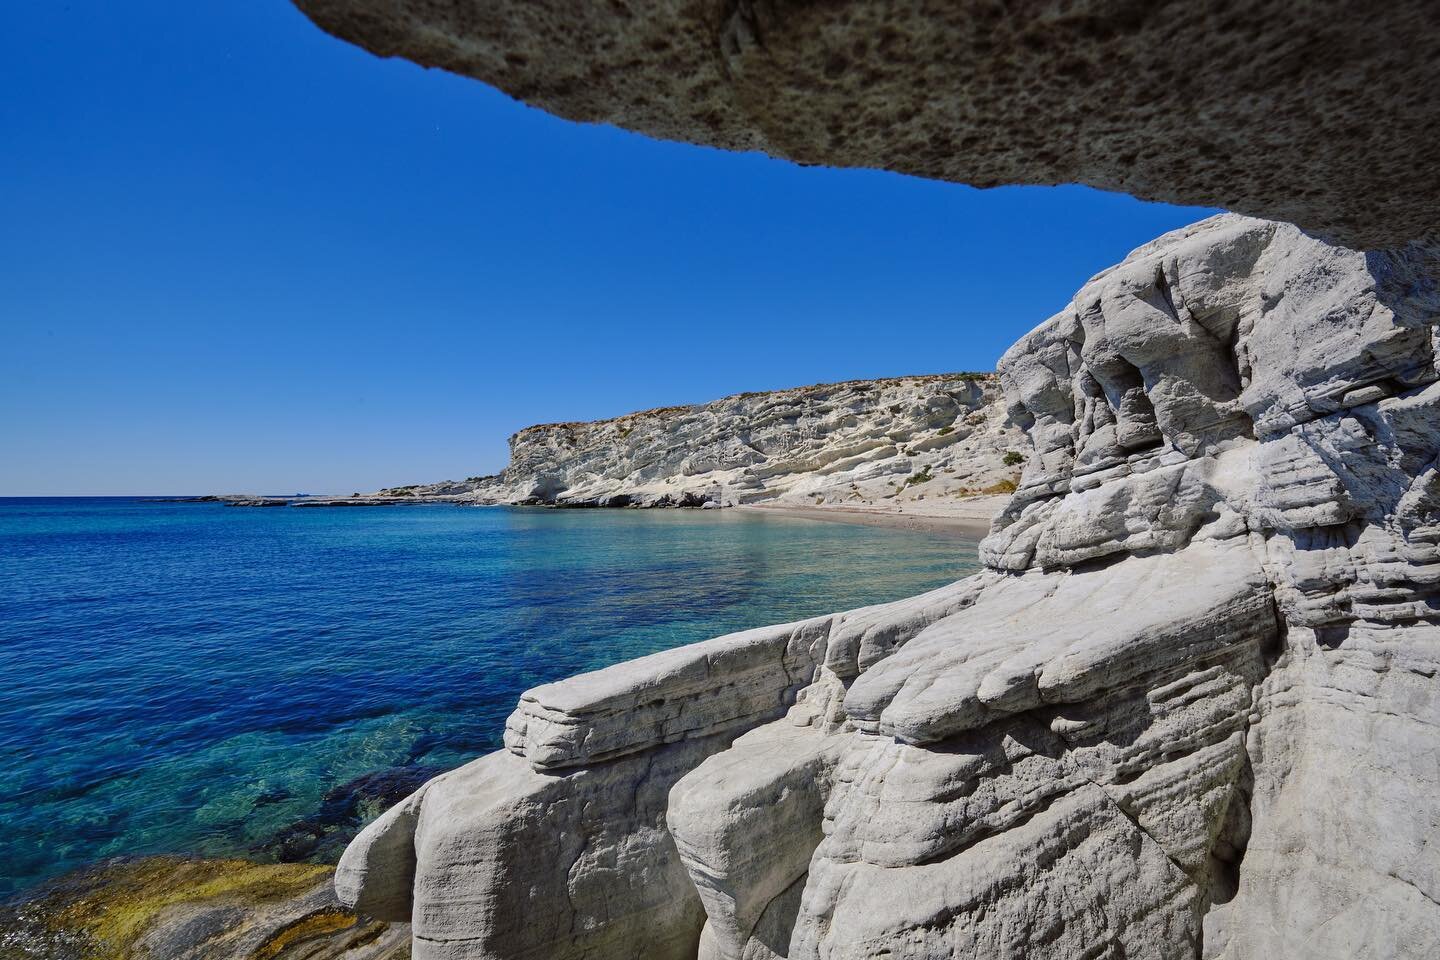 Relaxing times on the Aegean coast in Turkiye.